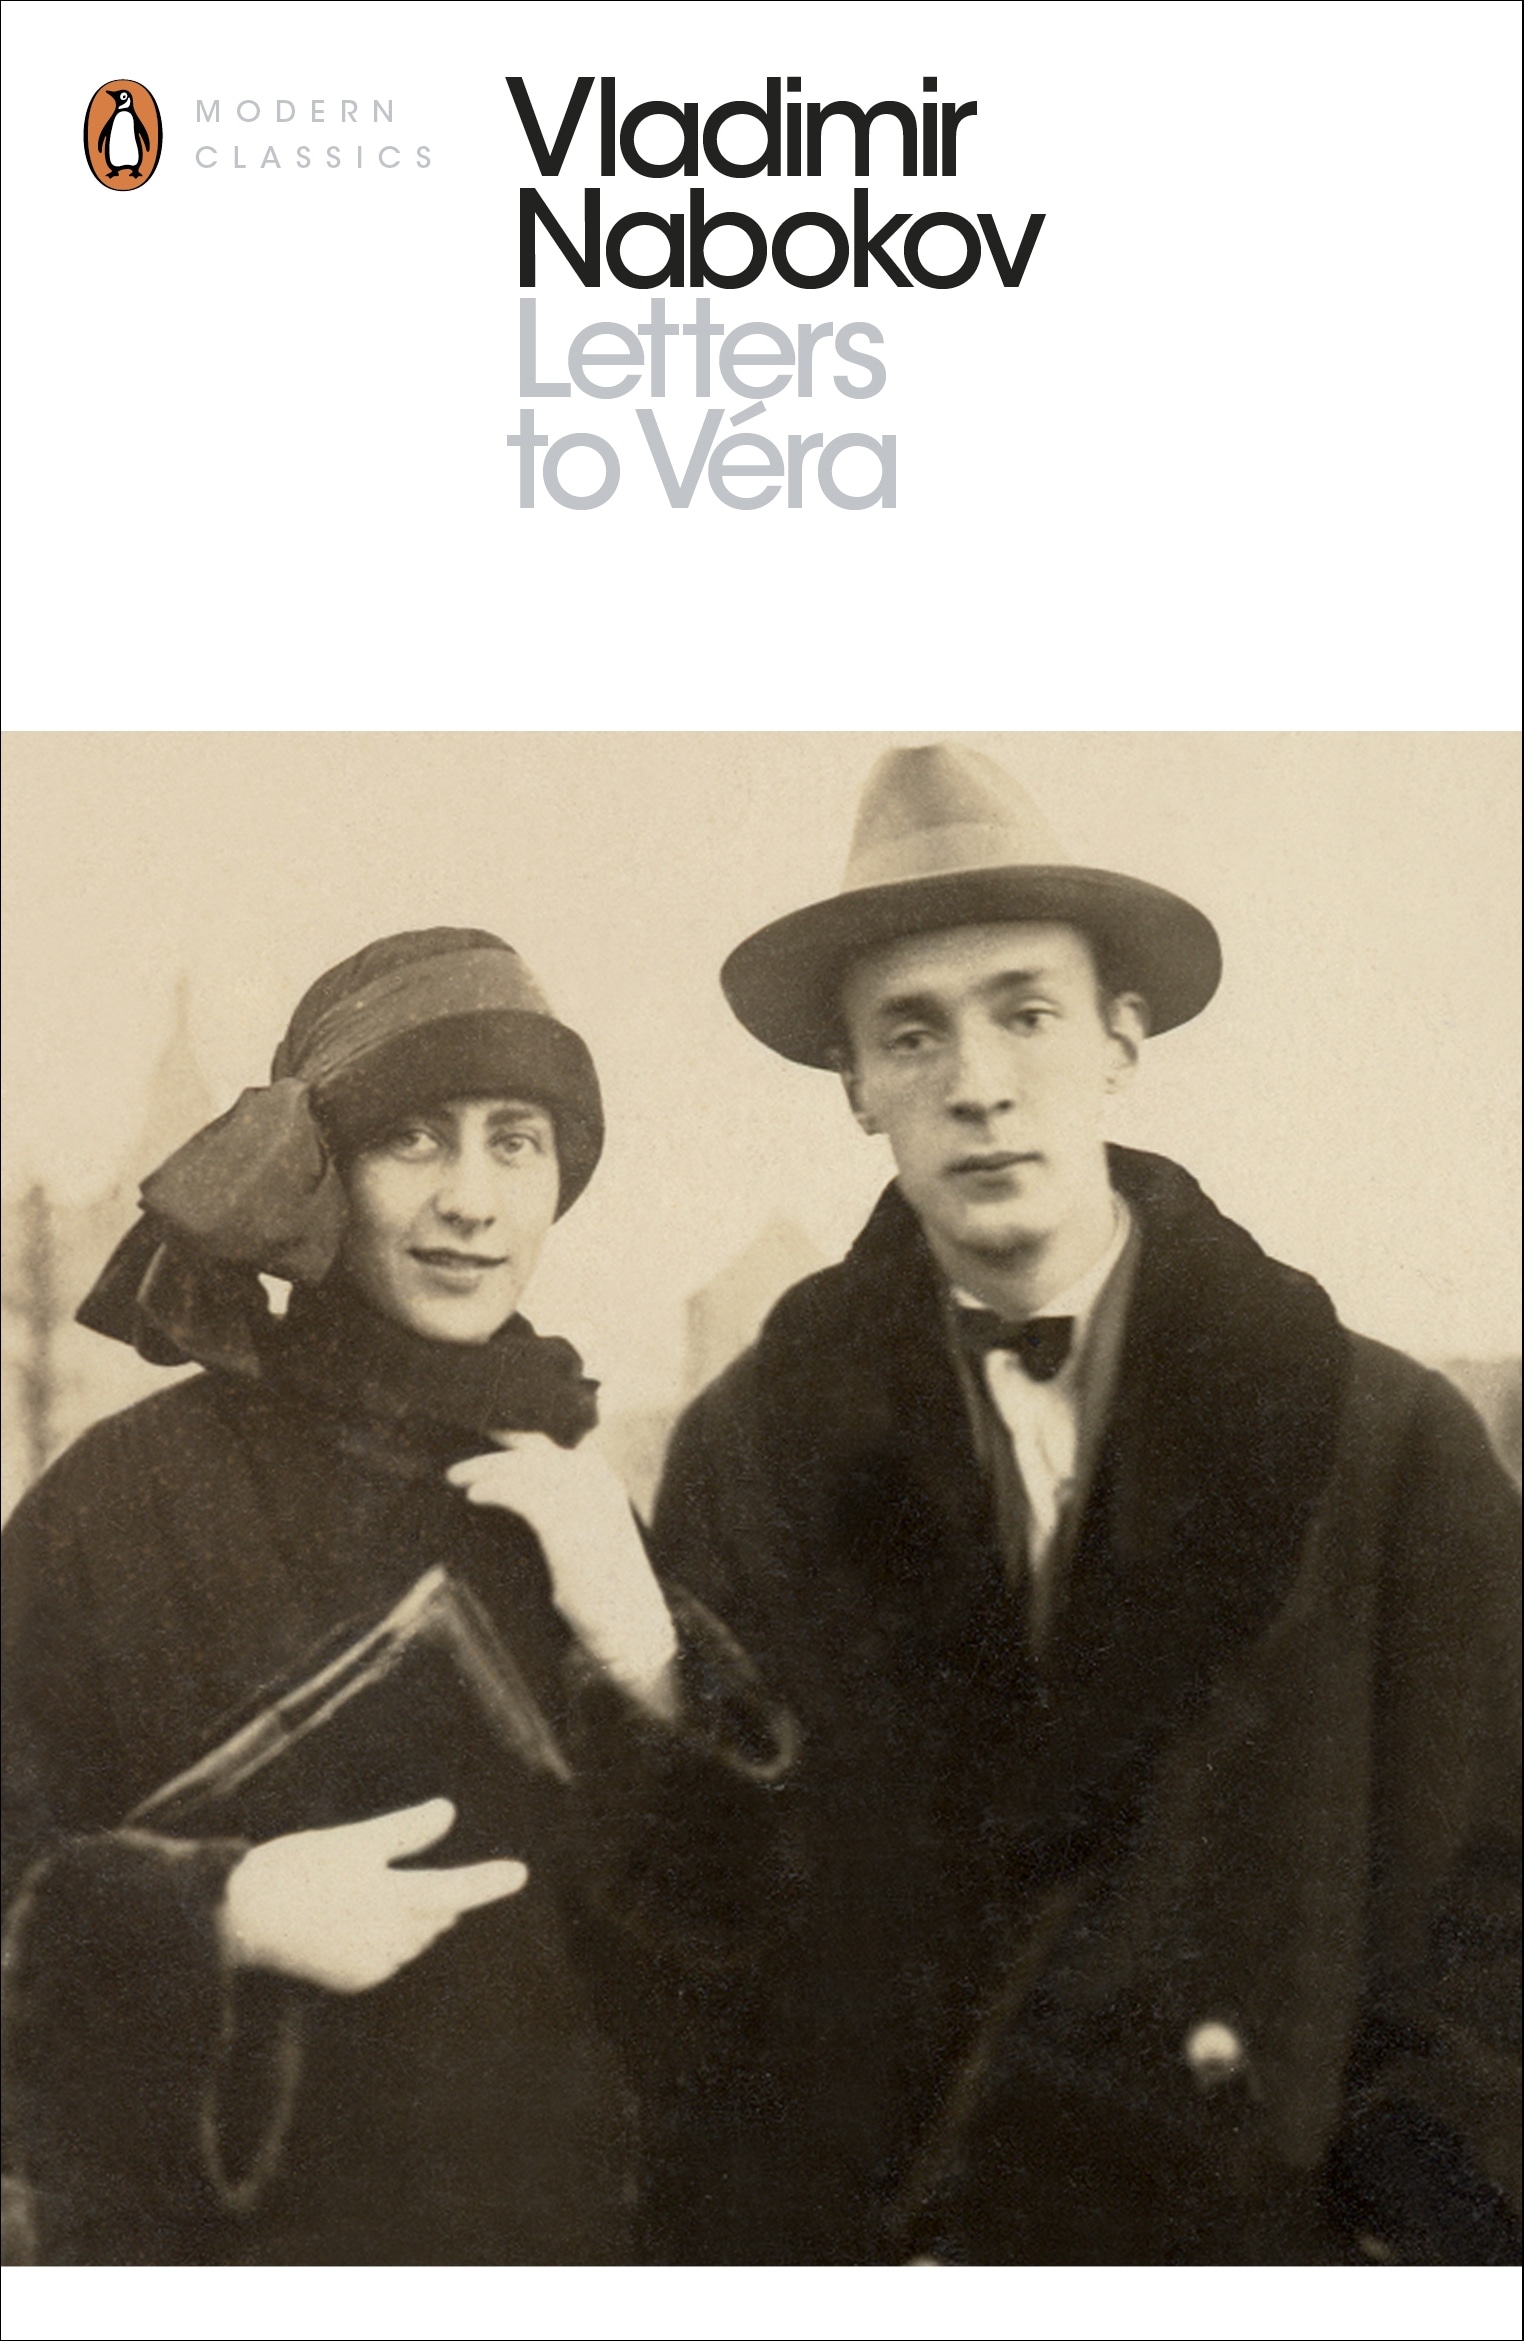 Book “Letters to Véra” by Vladimir Nabokov — February 4, 2016